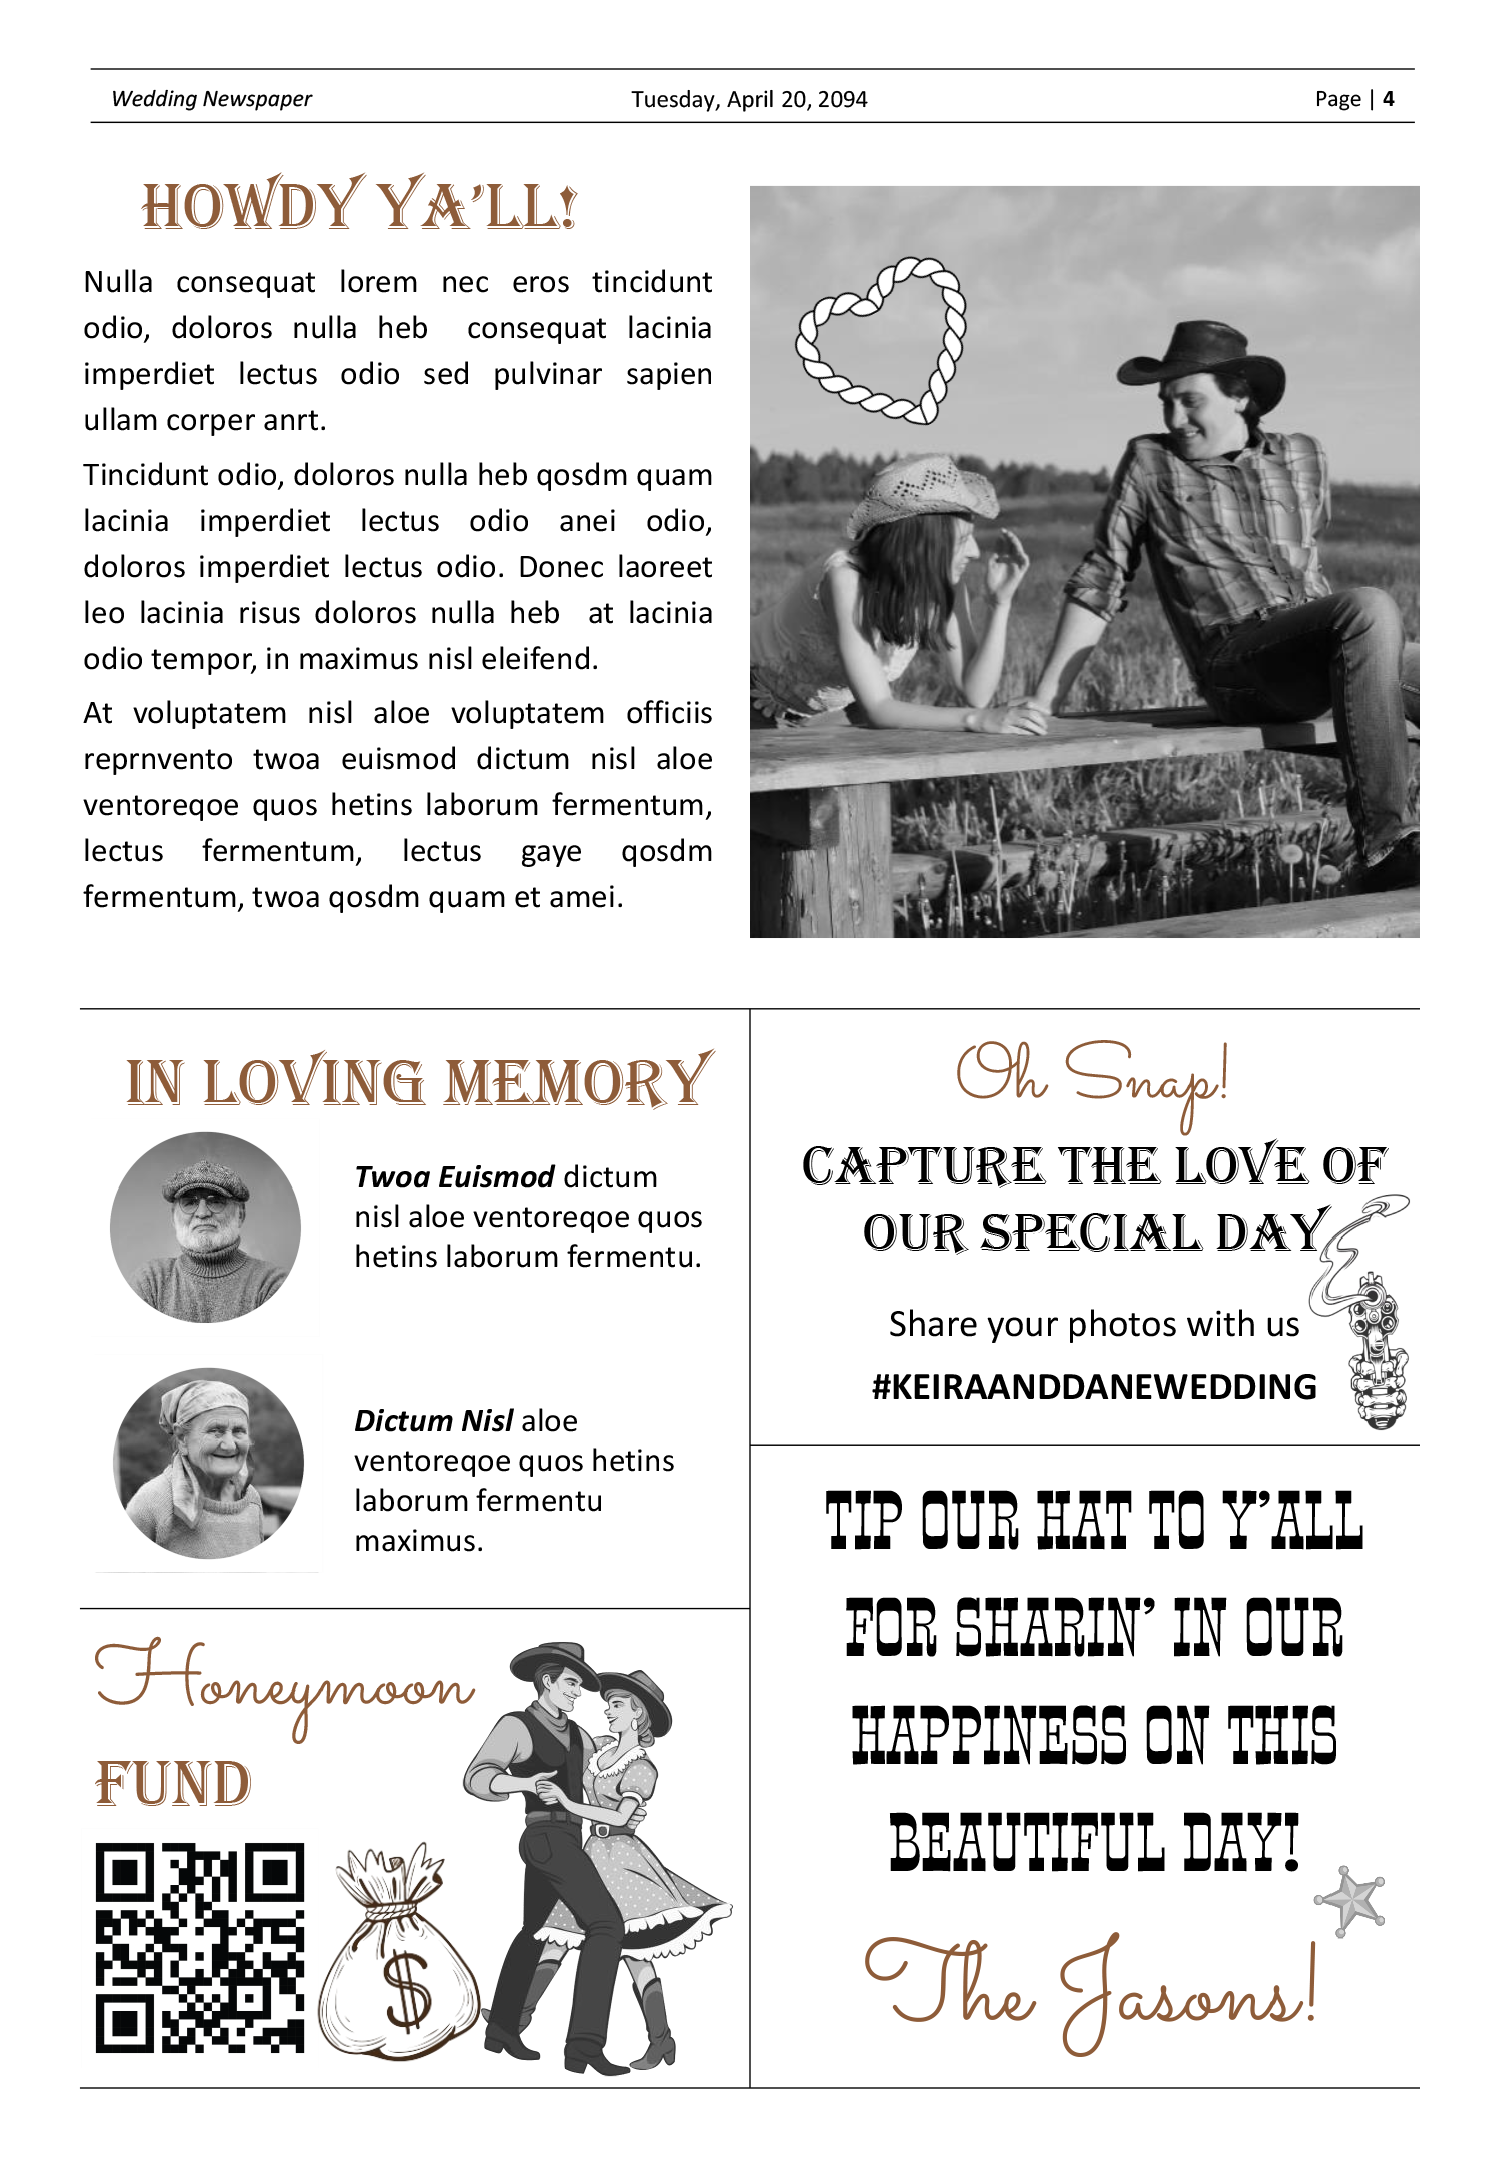 Cowboy Themed Wedding Program Newspaper Template - Page 04